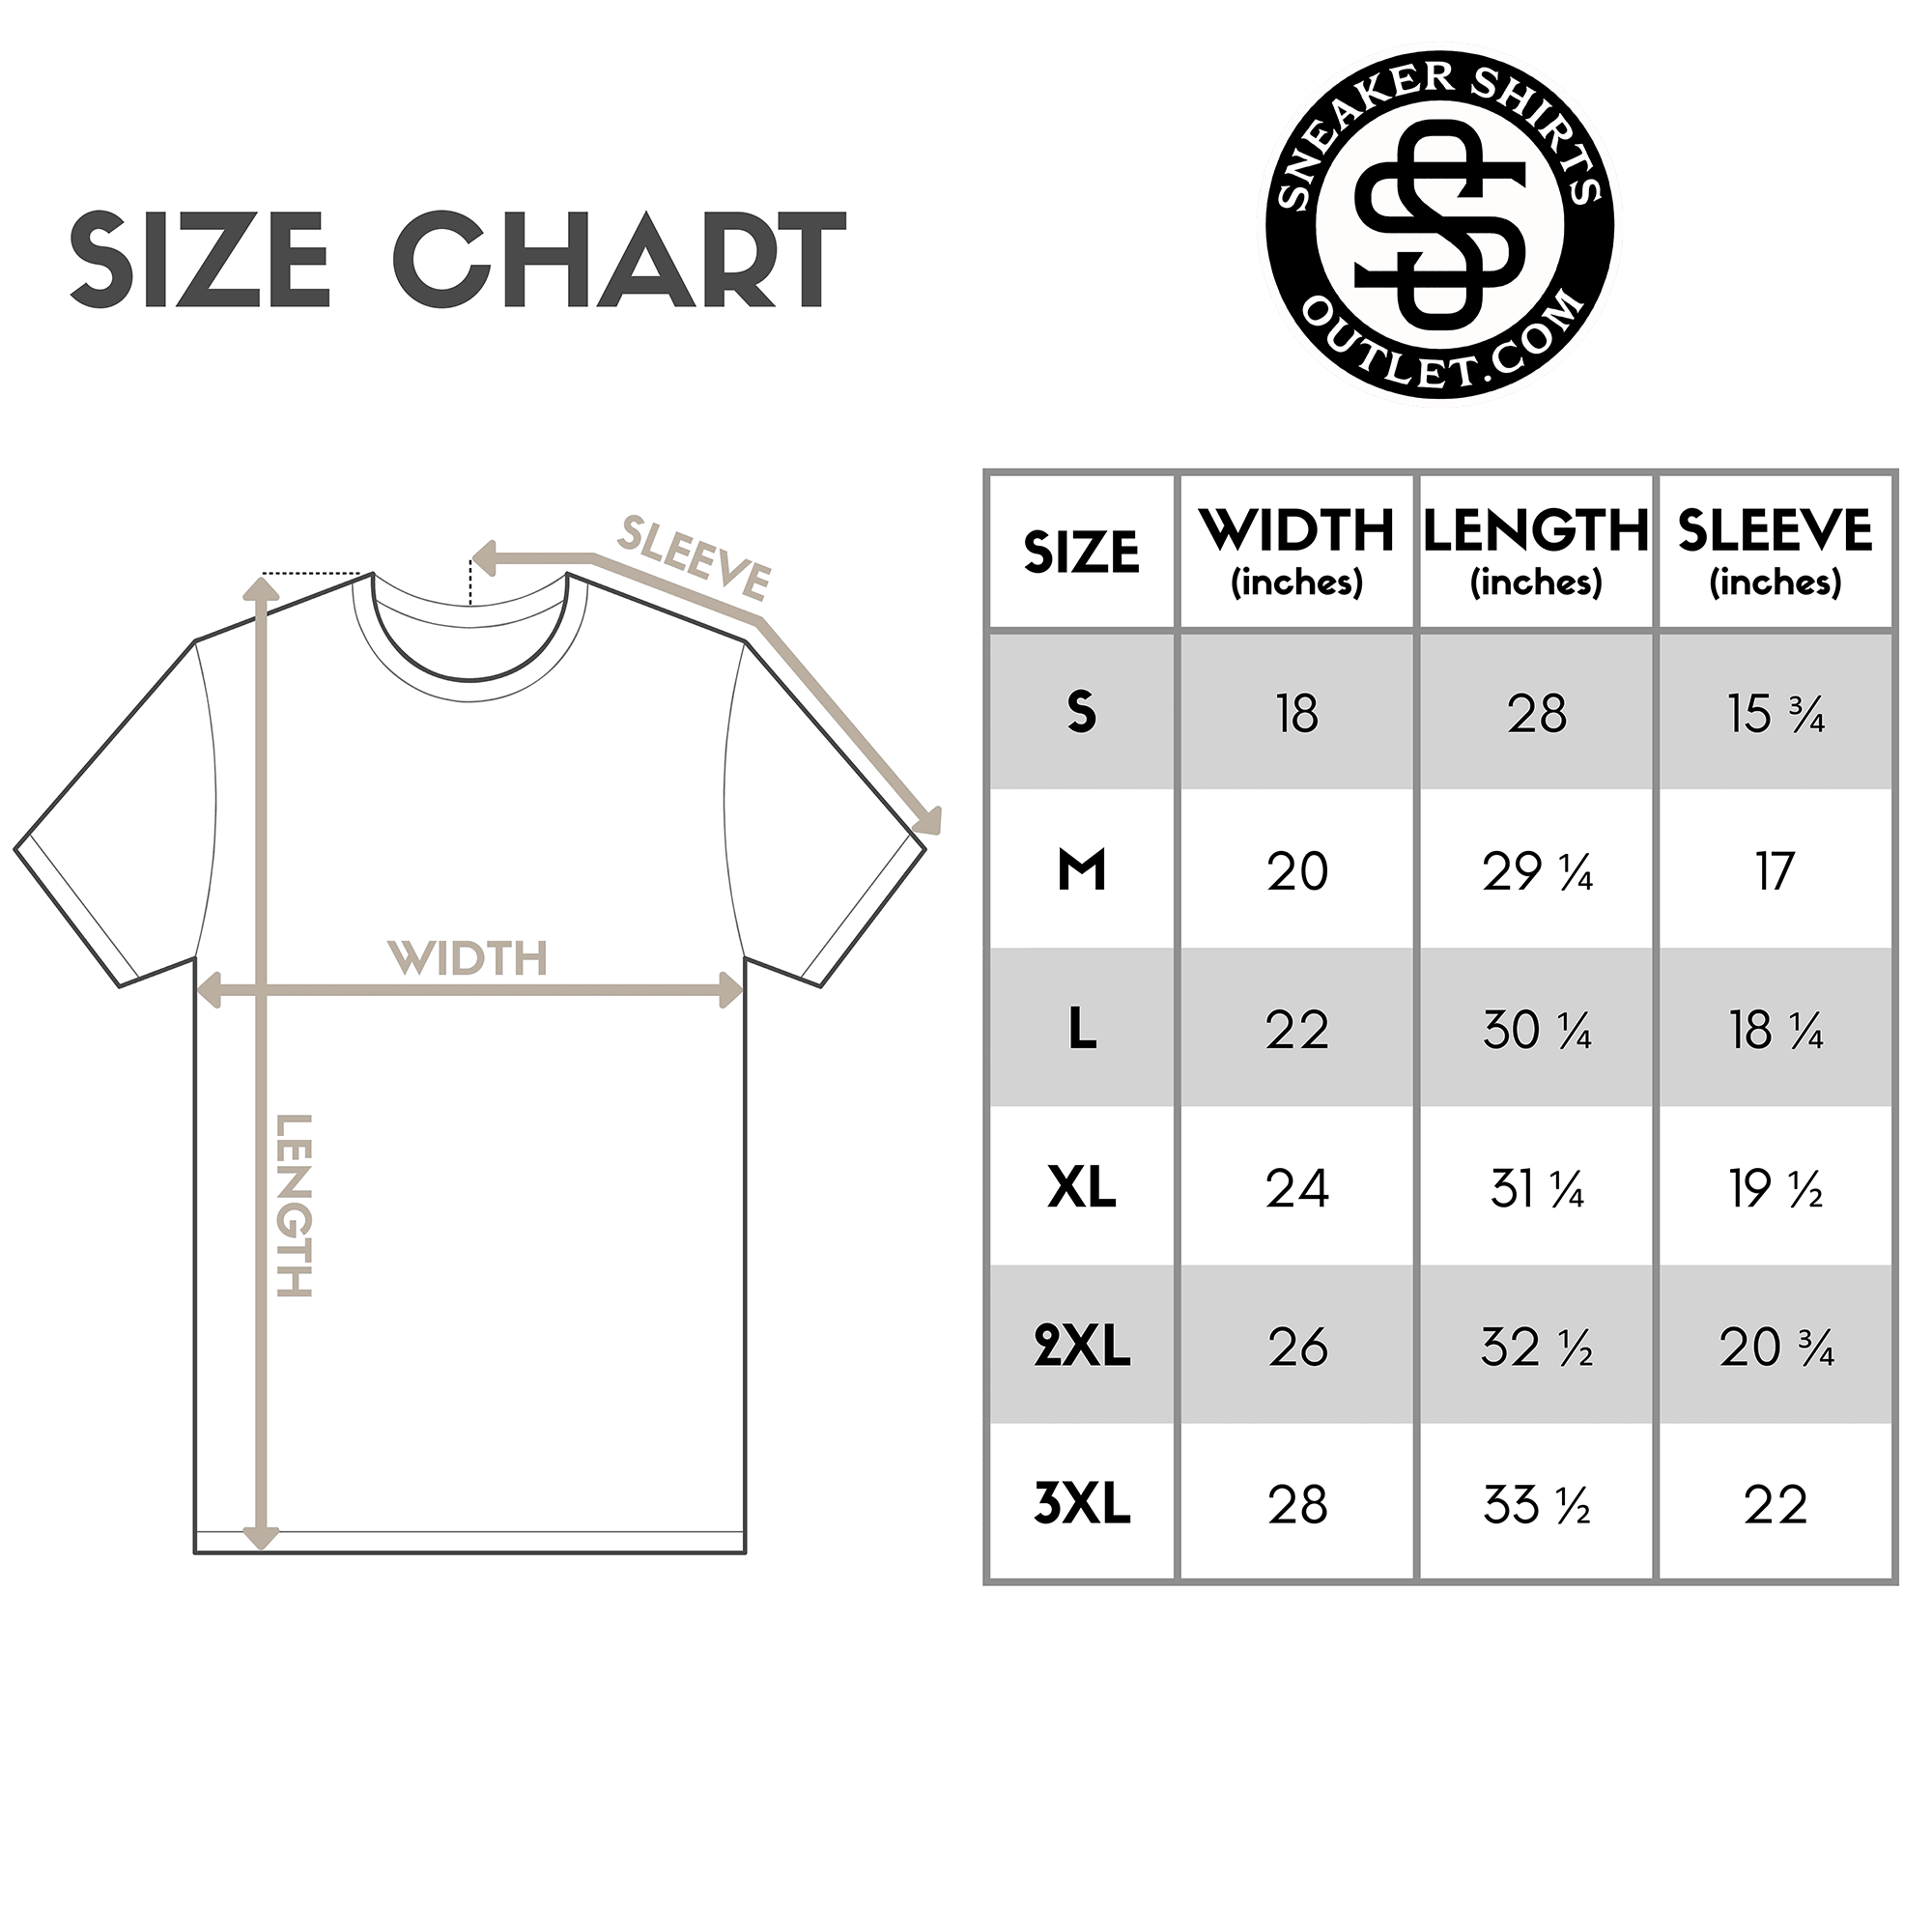 More Money Less Friends Shirt size chart photo